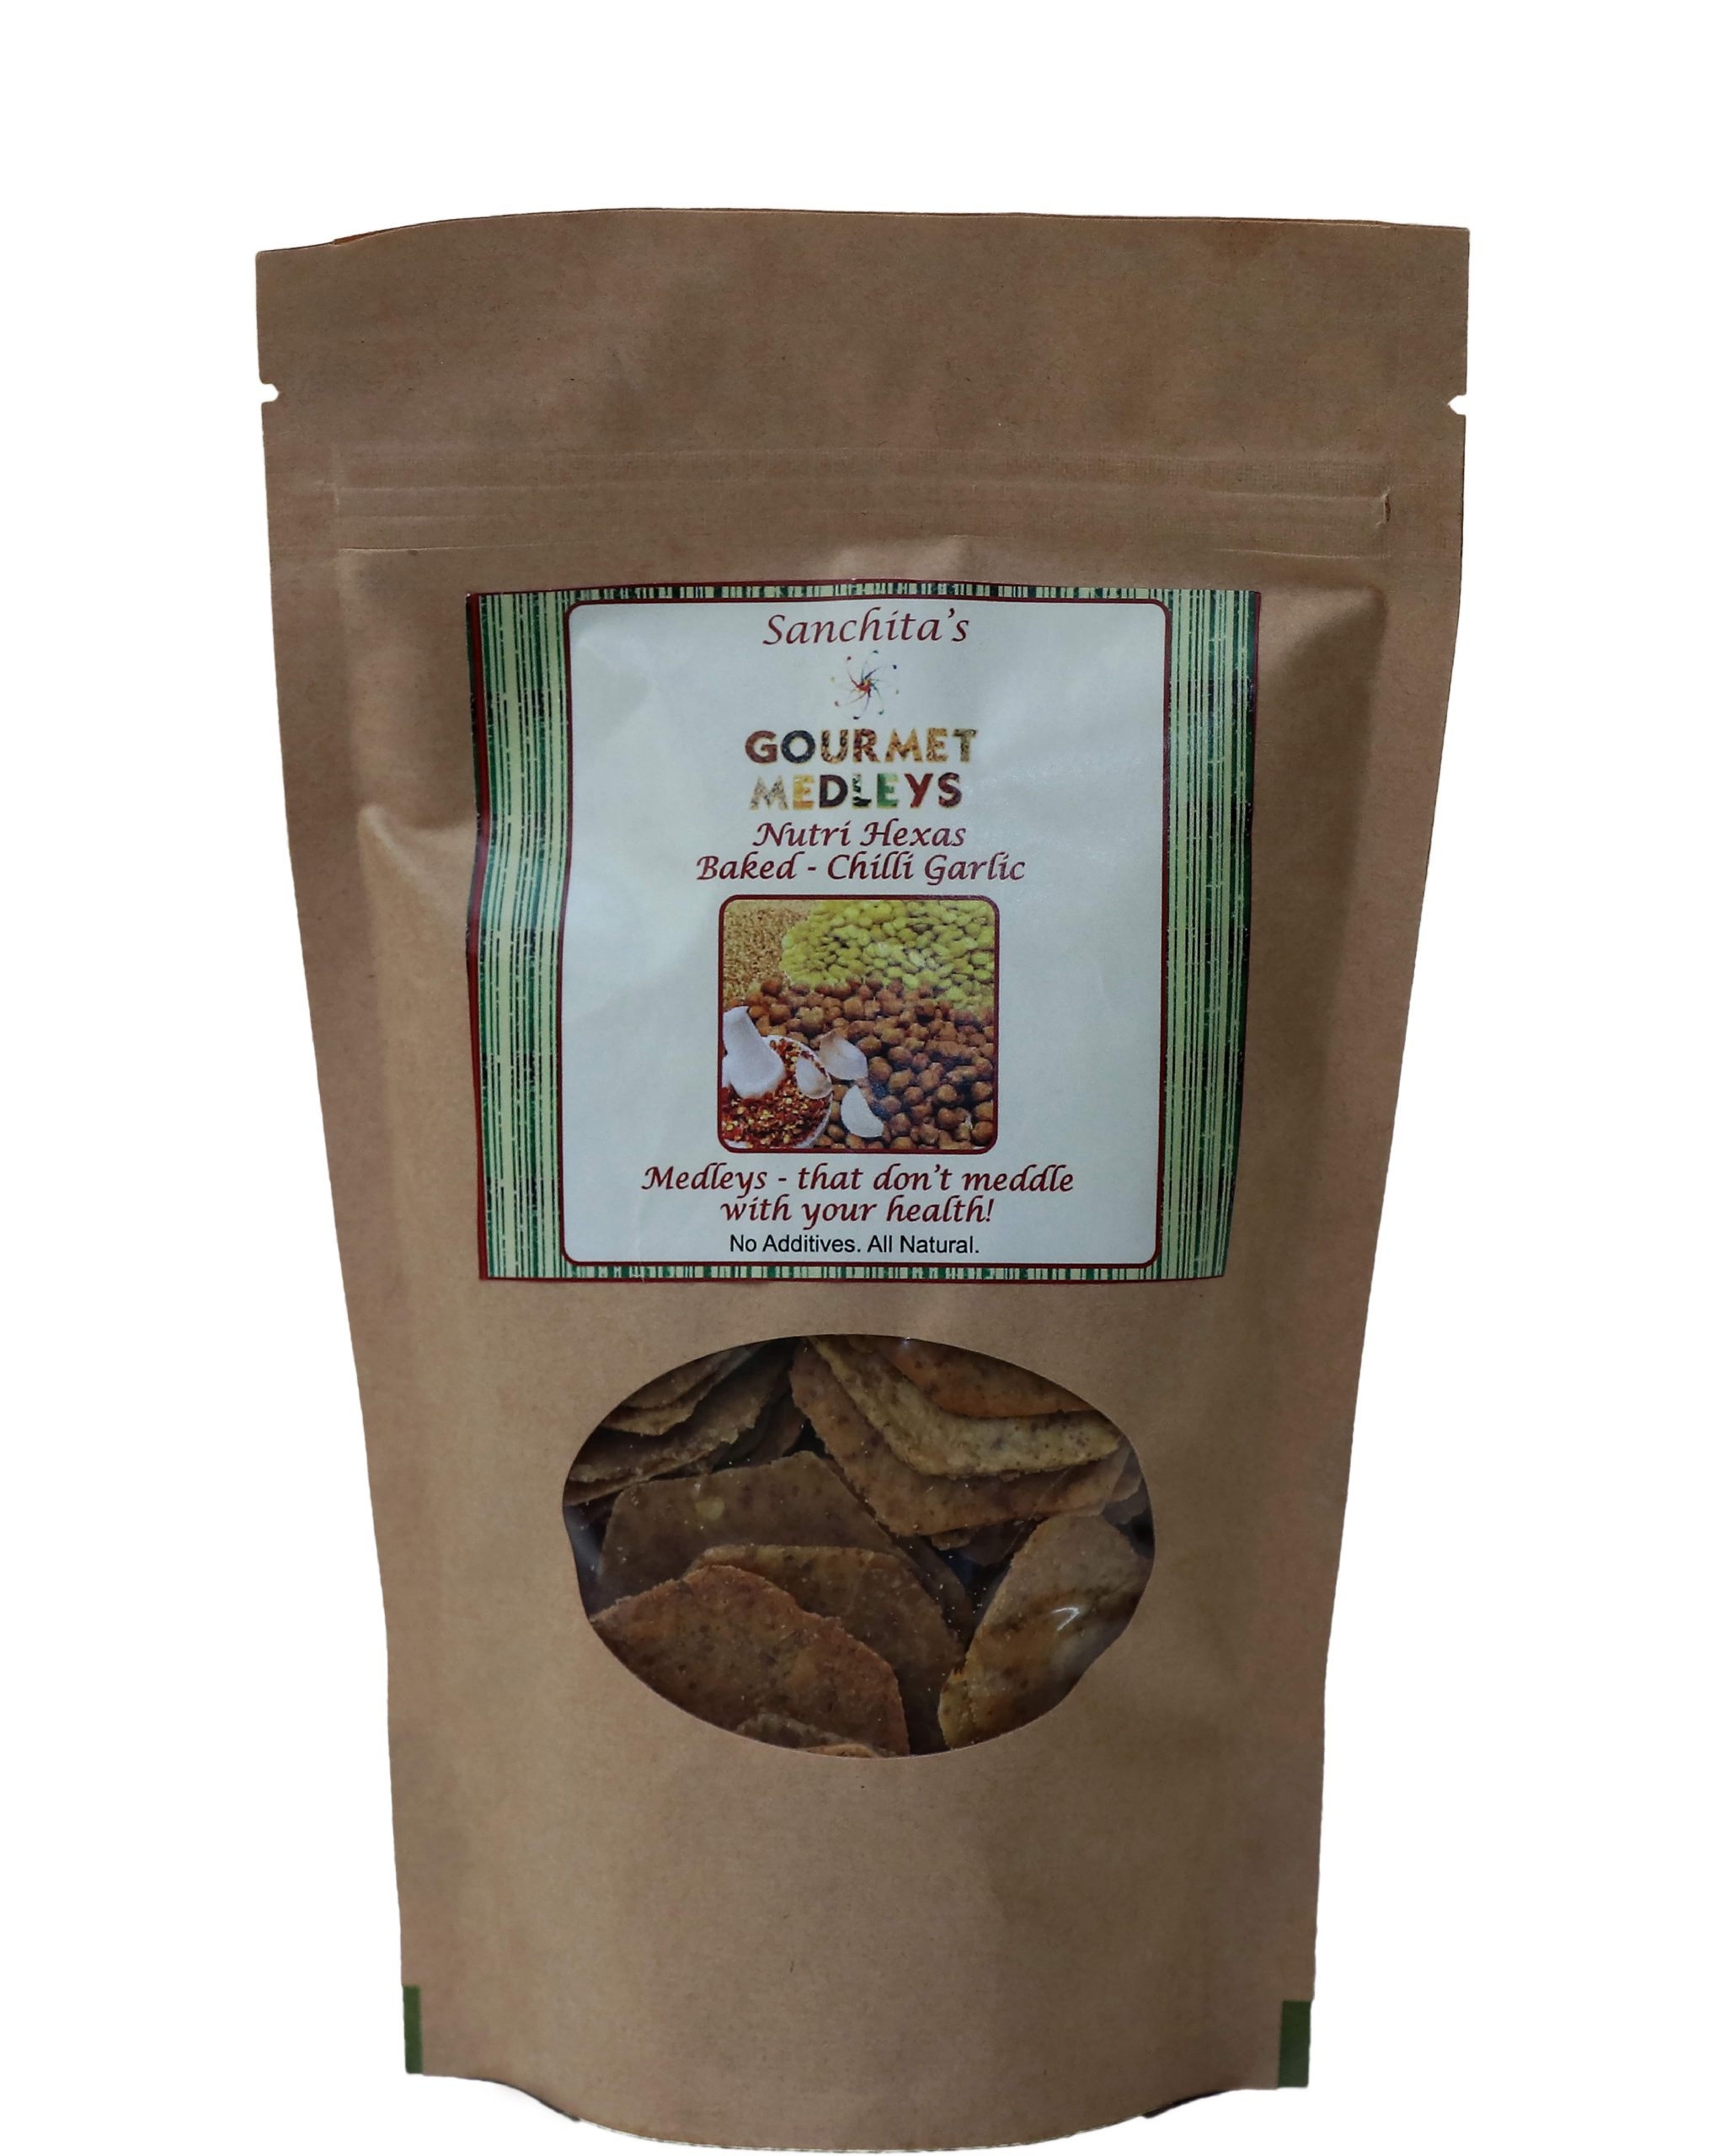 Product: Gourmet Medleys Husked Green Gram crackers Oregano& basil